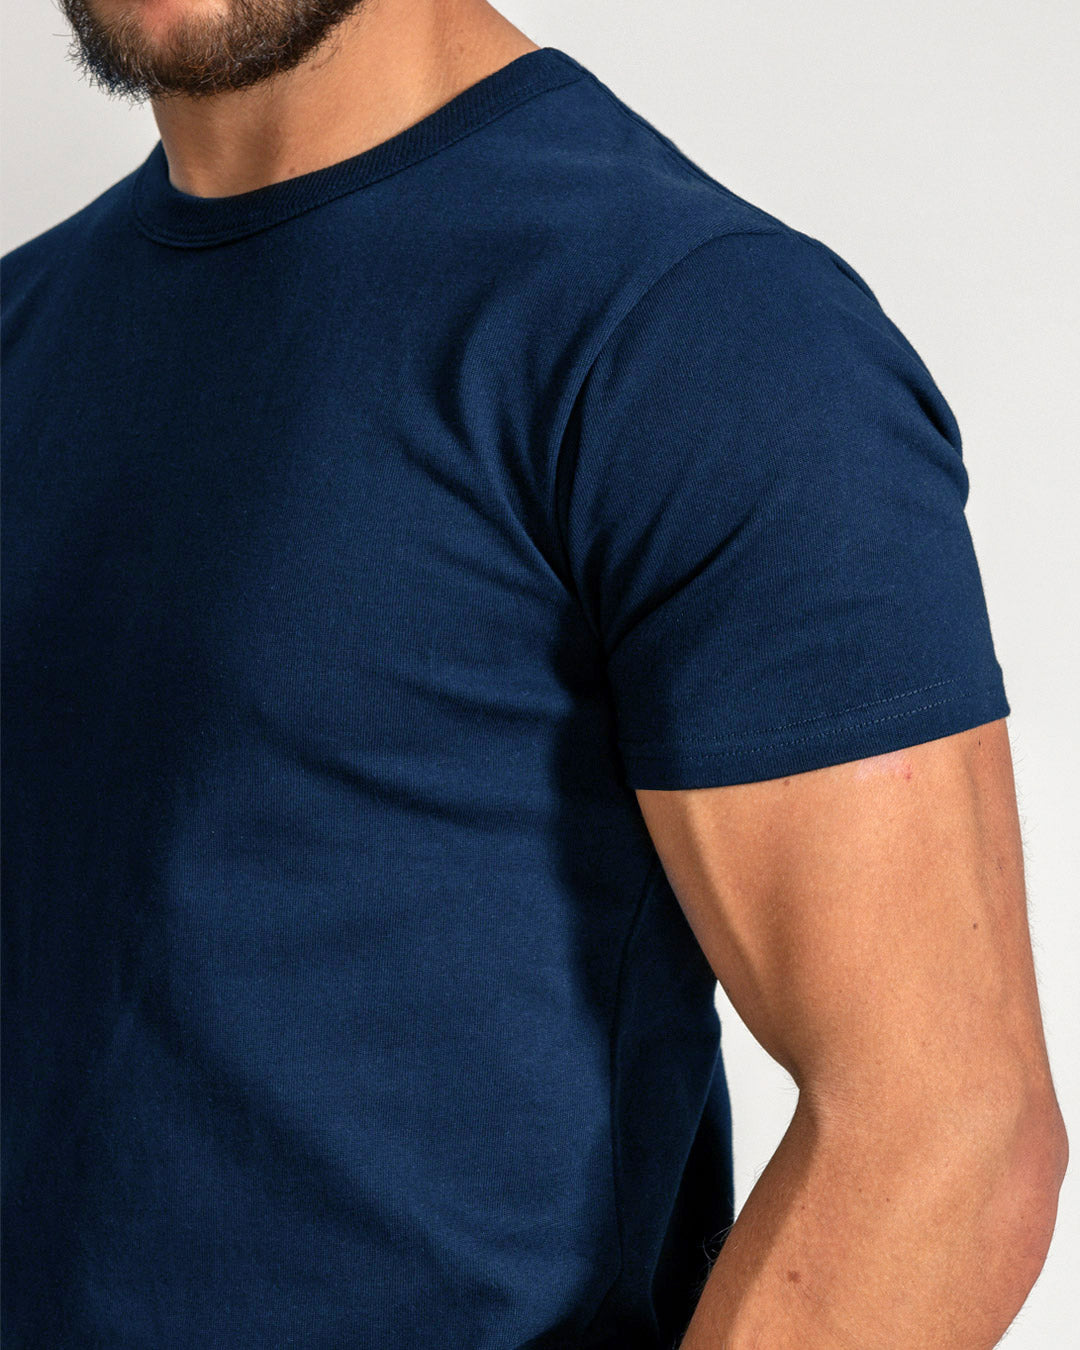 Crew Basic Muscle Fitted Premium Heavyweight Plain T-Shirt - Navy